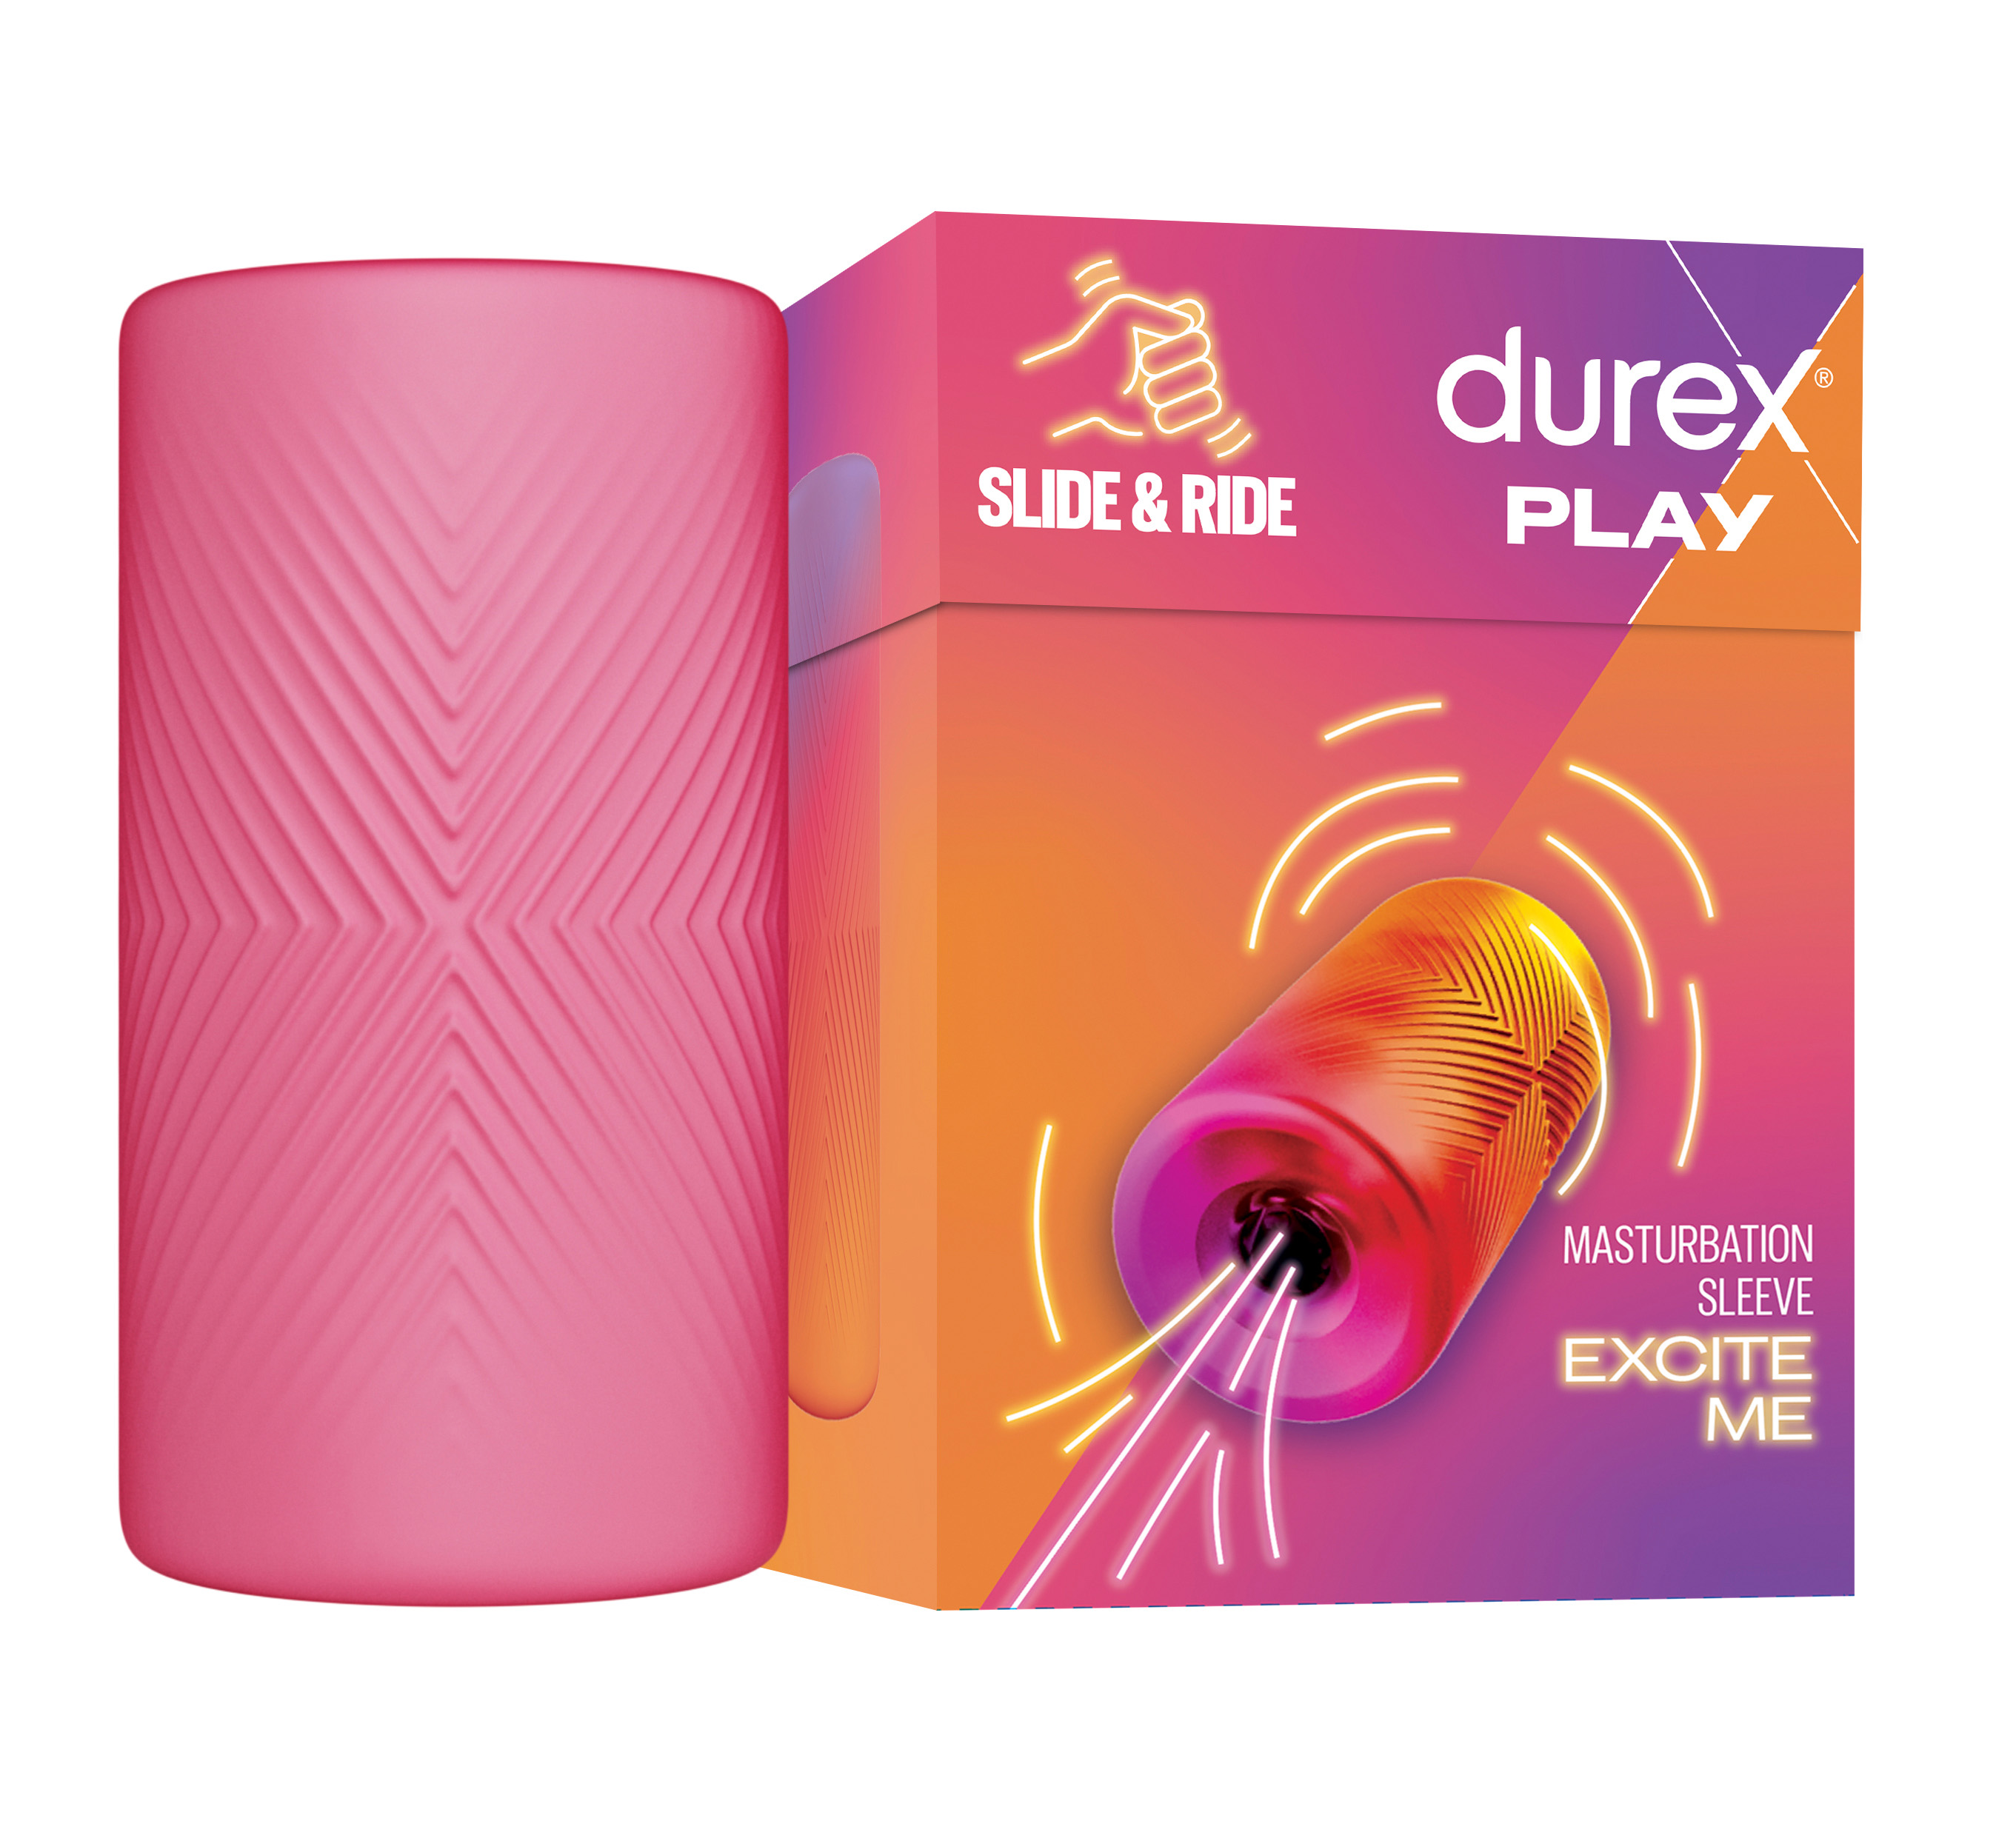 DUREX Slide & Ride Masturbation Sleeve